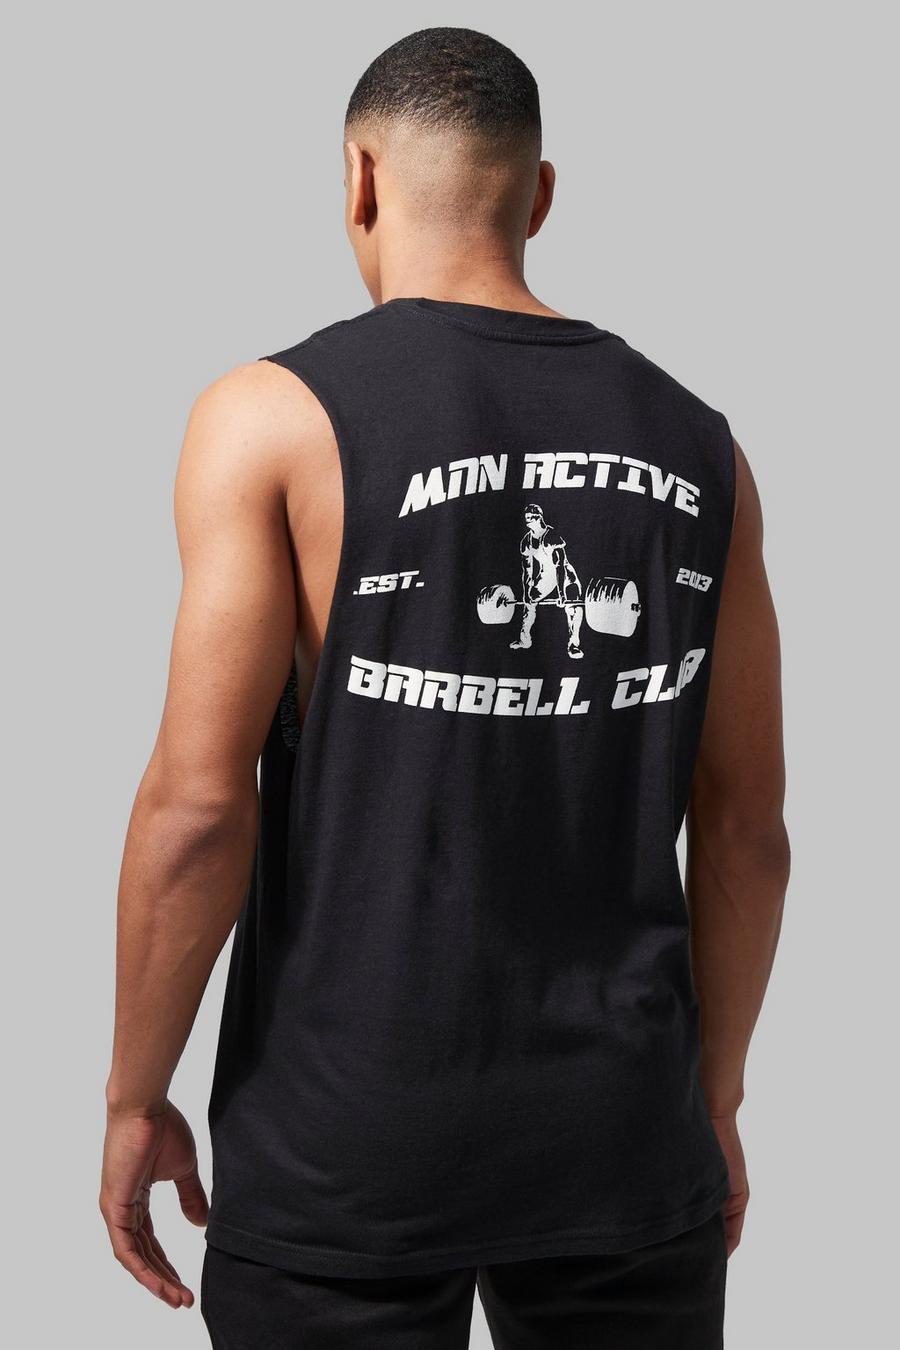 Black Man Active Barbell Club Tank Top